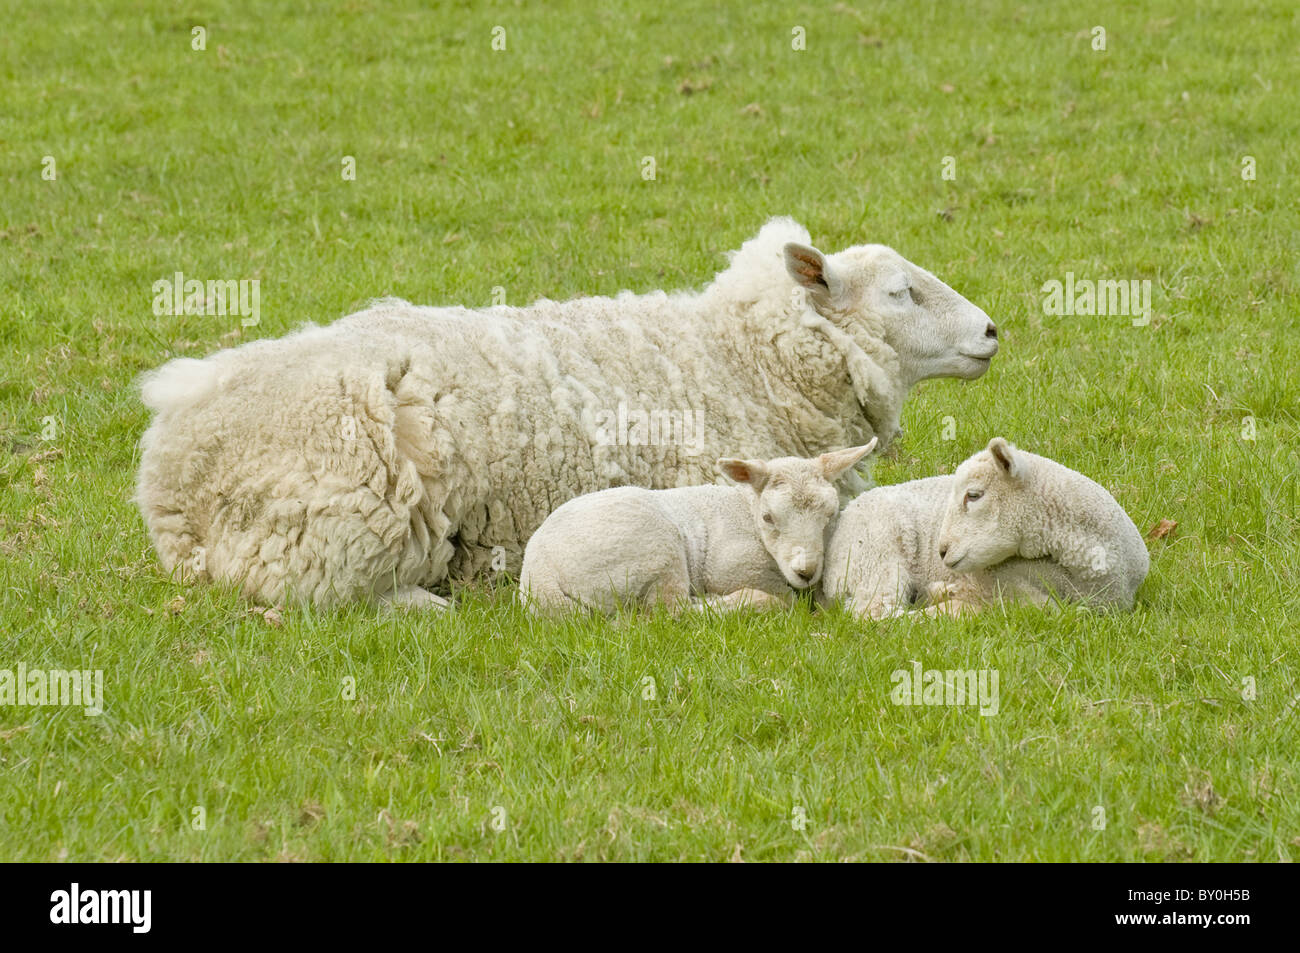 3 sheep laid together on farm field grass (sleepy ewe & two cute white lambs huddled & nestled close, resting & snoozing) - Yorkshire, England, UK. Stock Photo